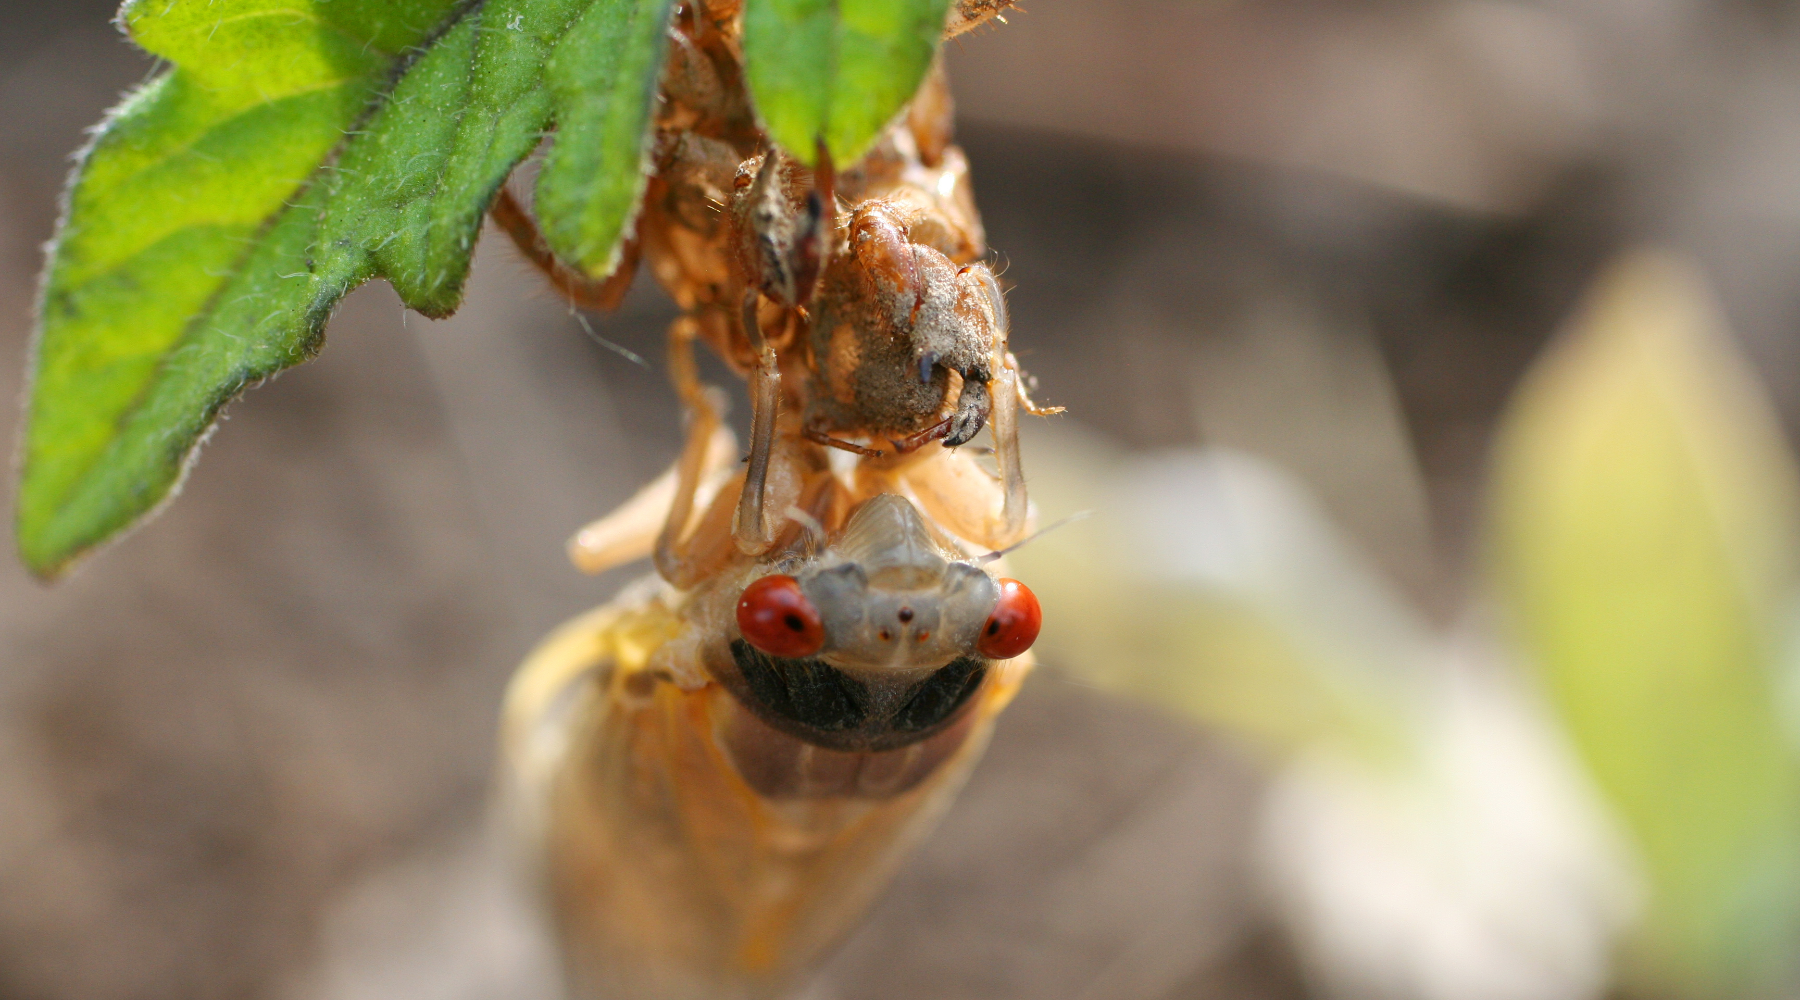 Periodical cicada molting